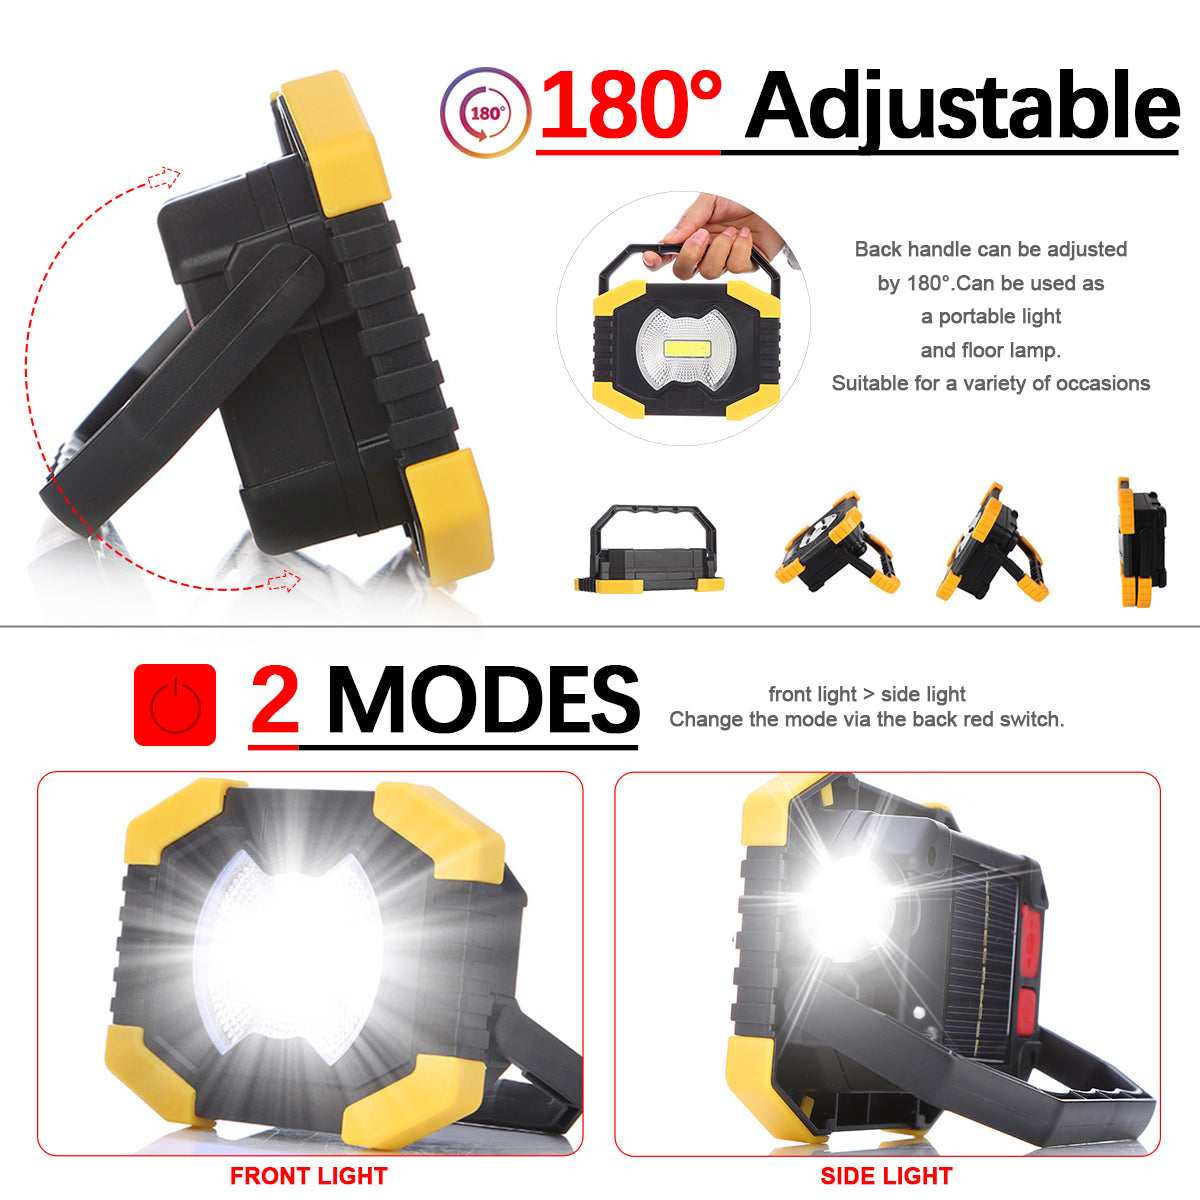 Portable camping light